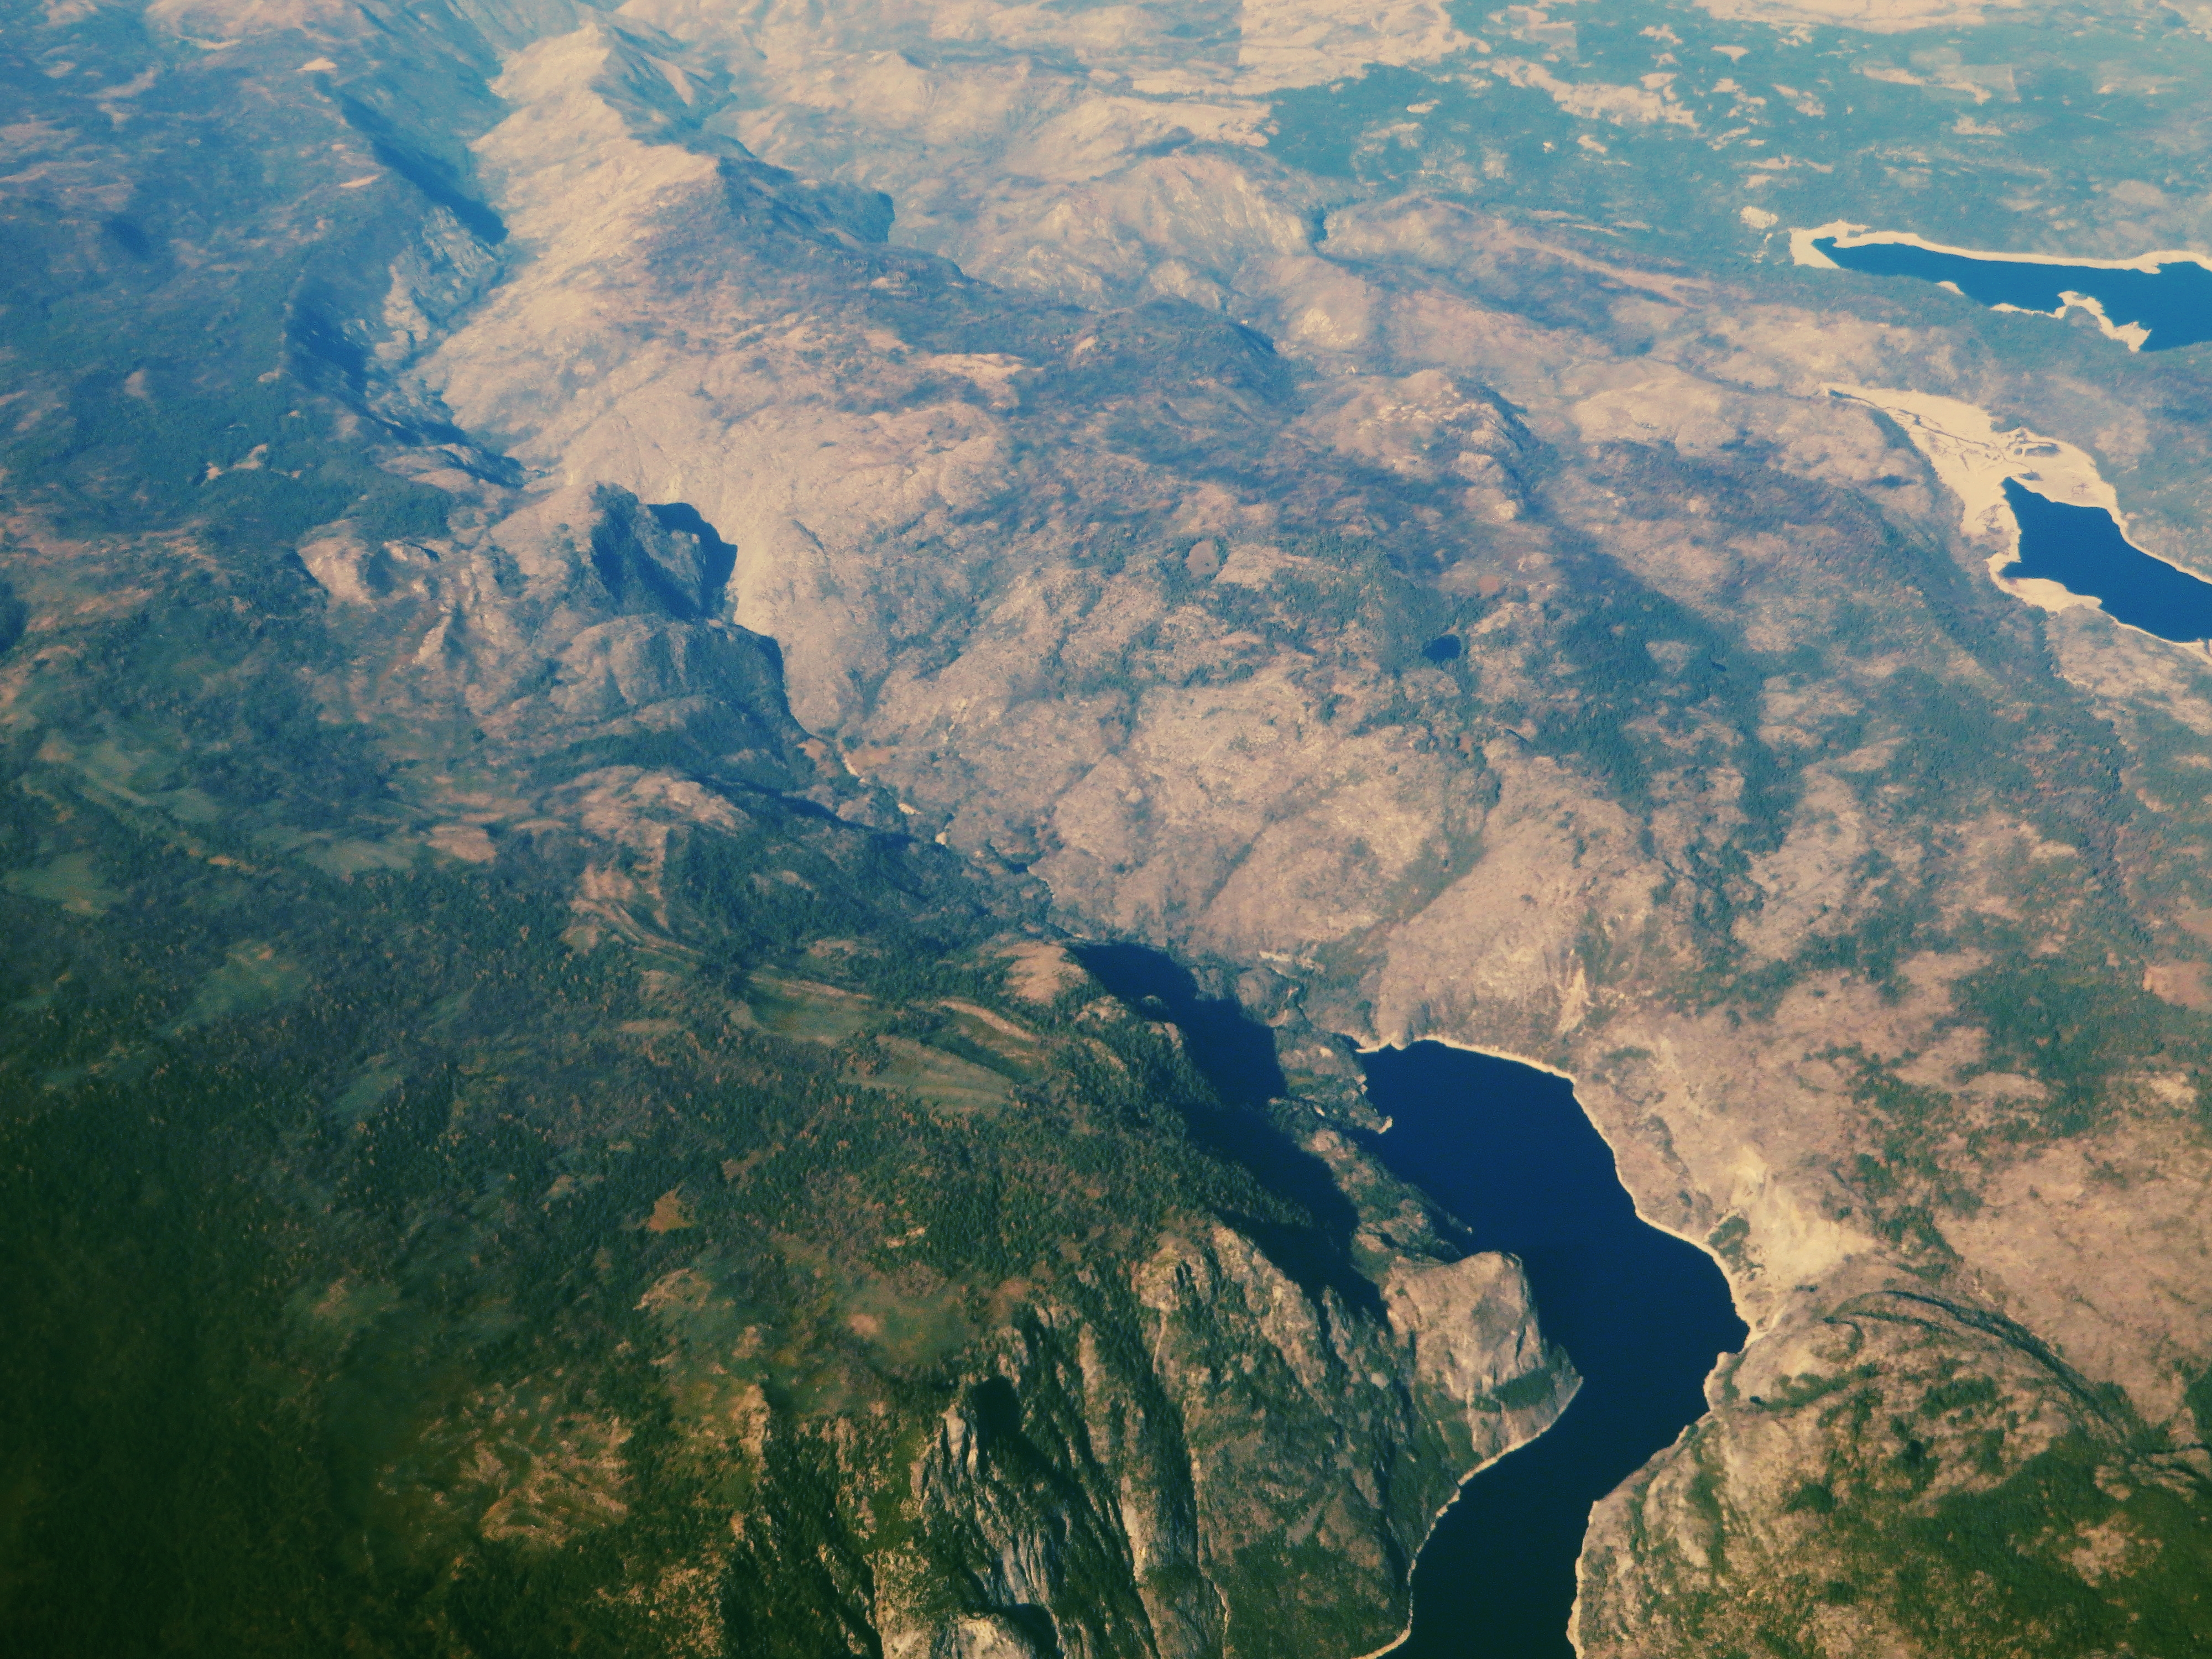 Aerial view of Hetch Hetchy reservior in Yosemite National Park